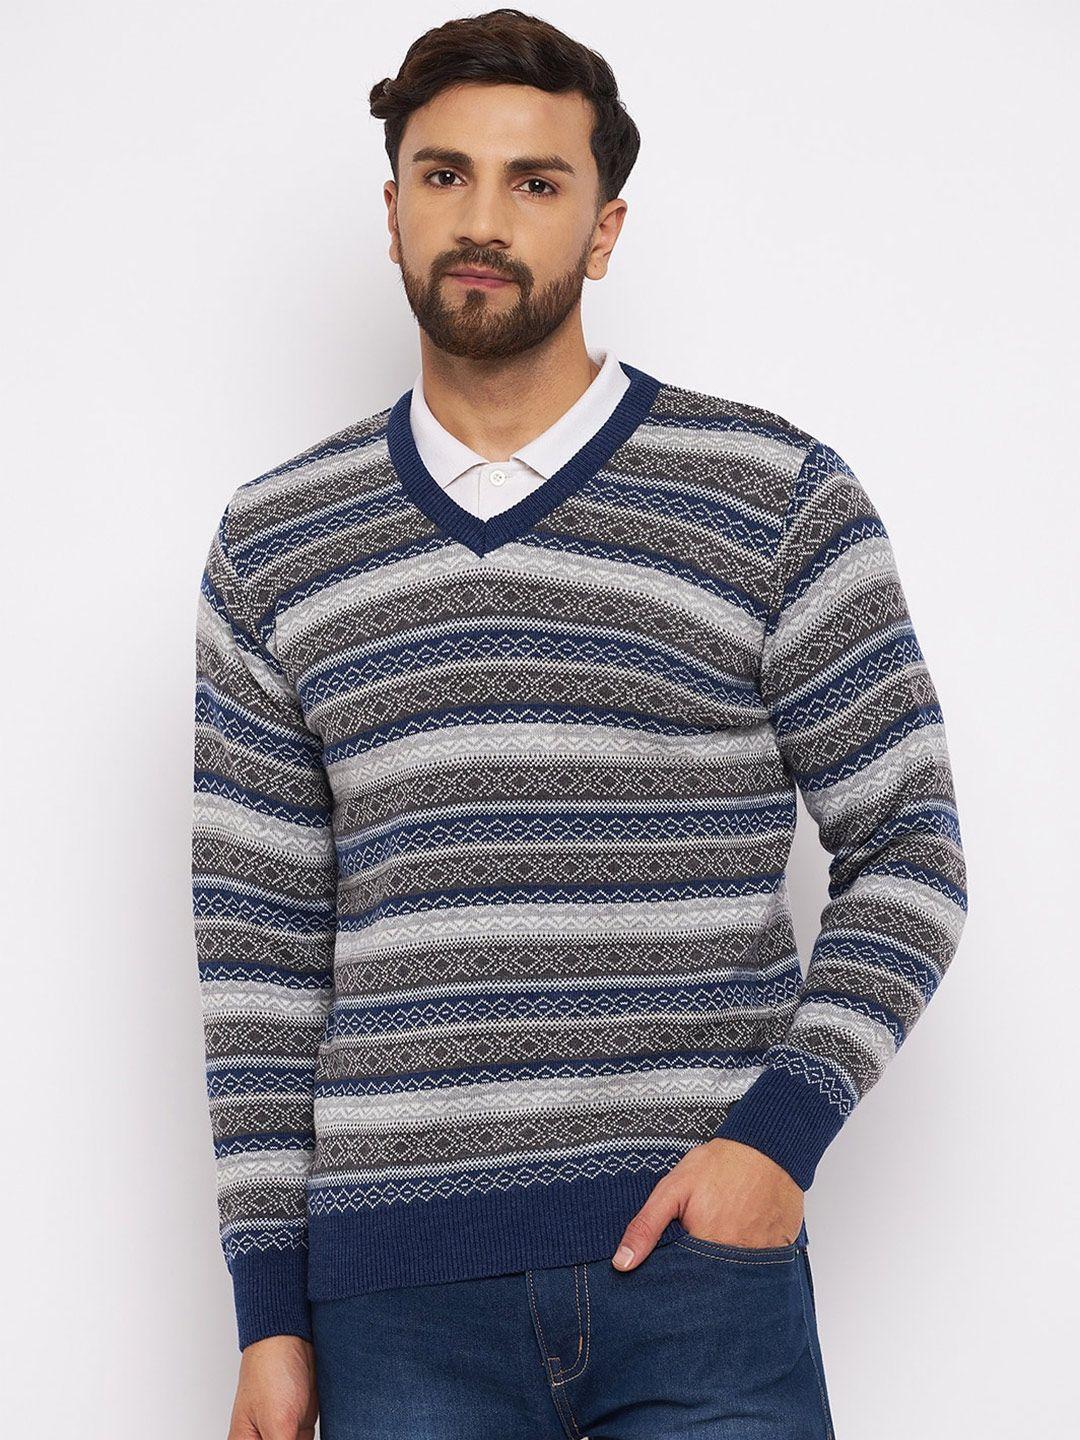 duke-men-blue-&-grey-printed-acrylic-pullover